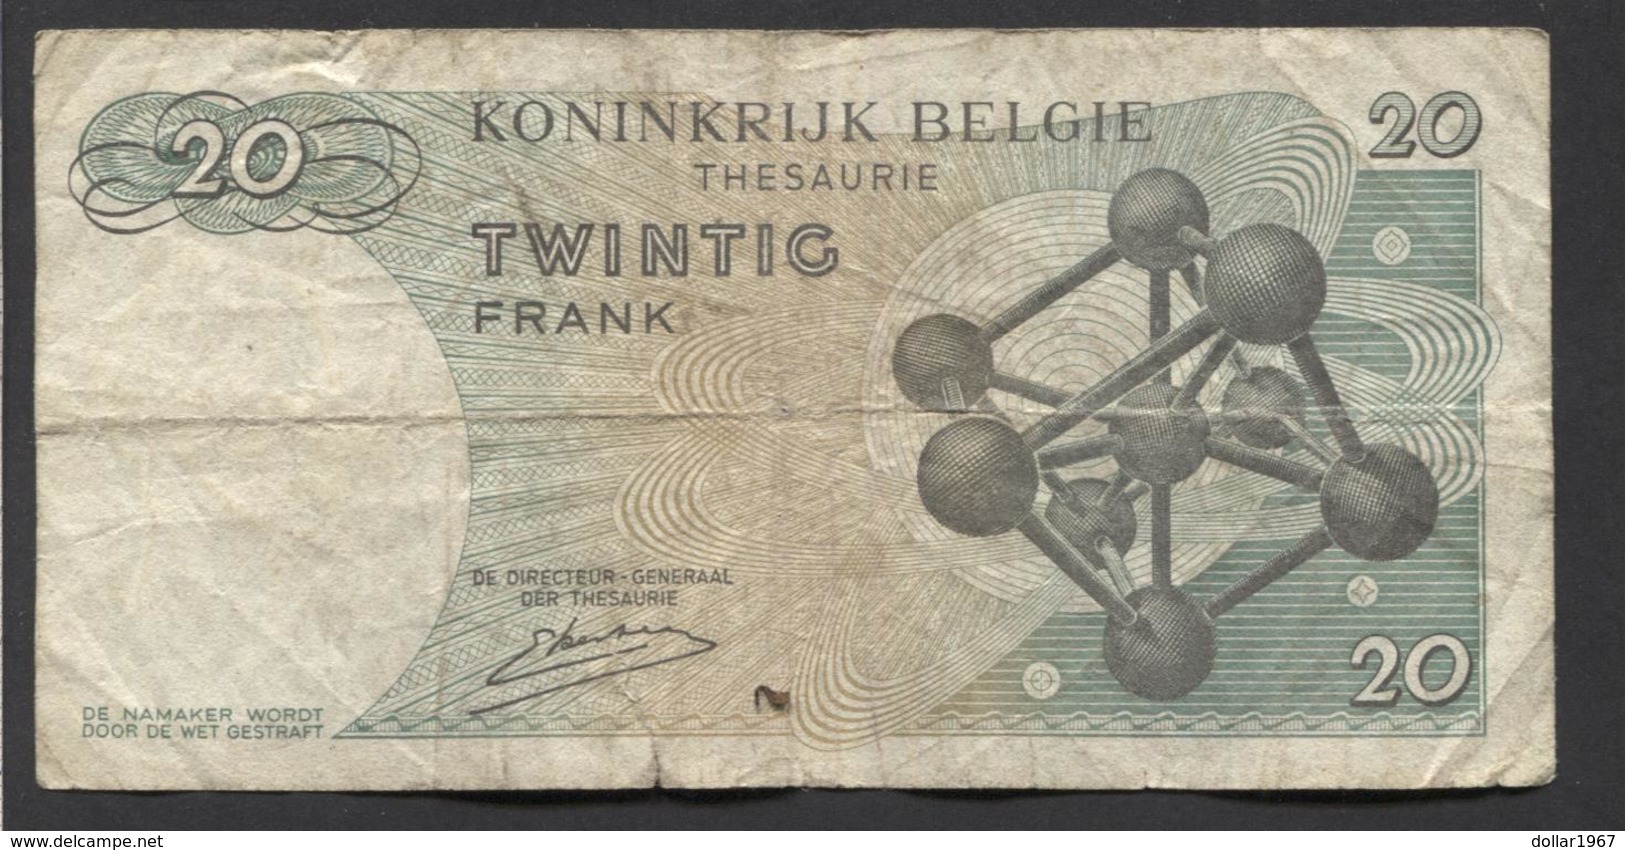 België Belgique Belgium 15 06 1964 -  20 Francs Atomium Baudouin. 4 B 1133746 - 20 Franchi